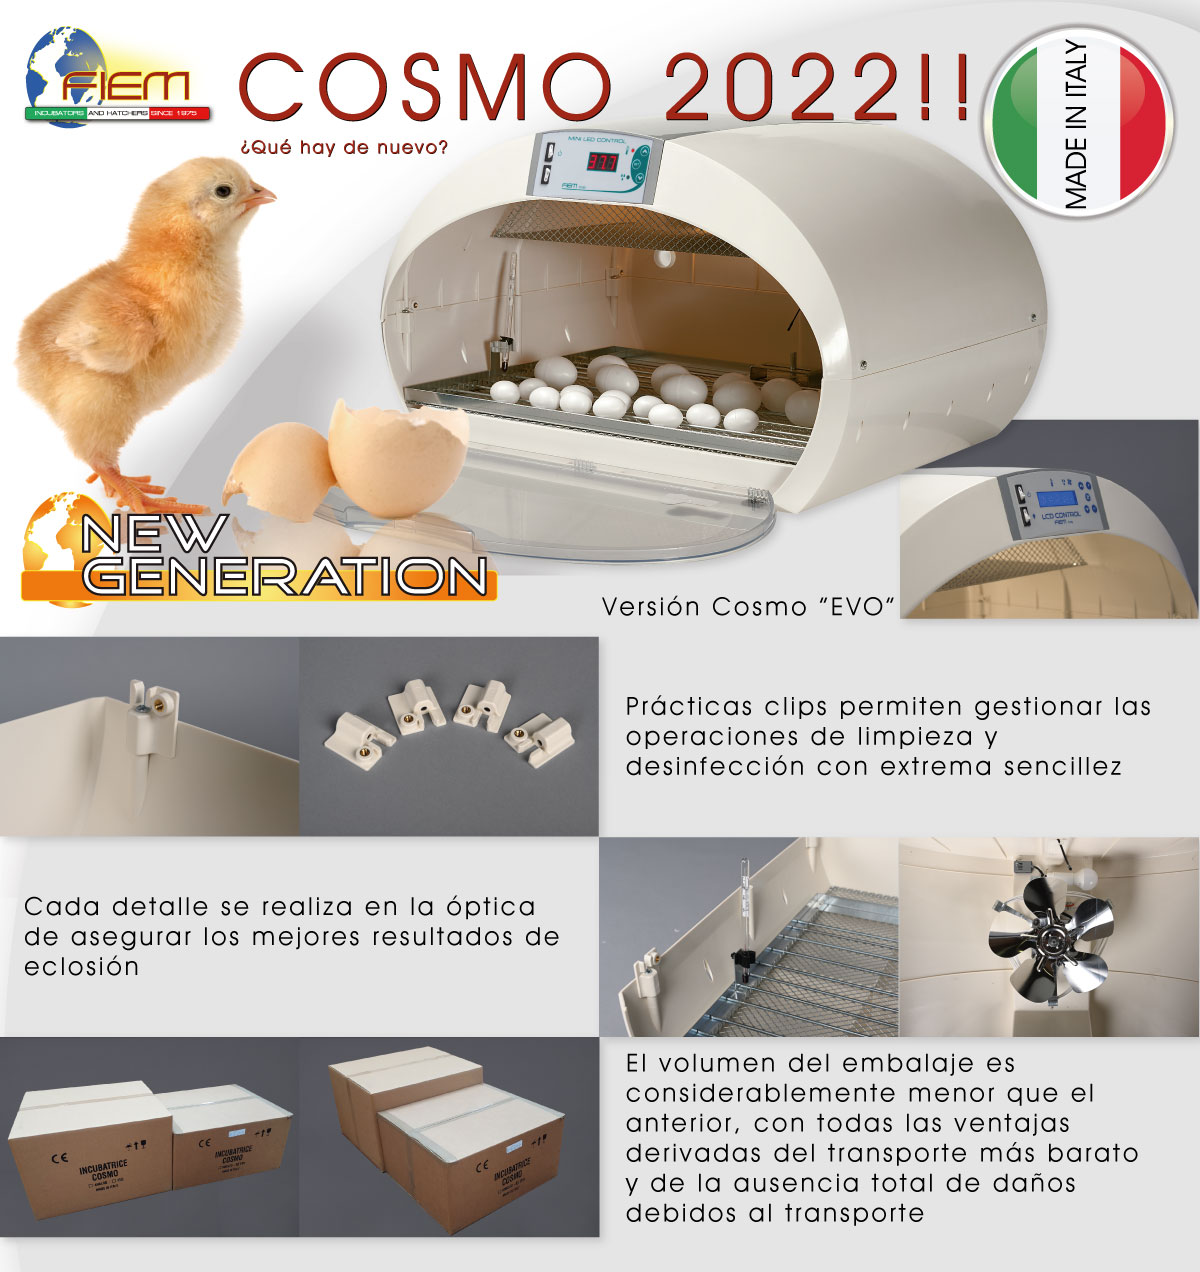 news cosmo 02 22 ITA